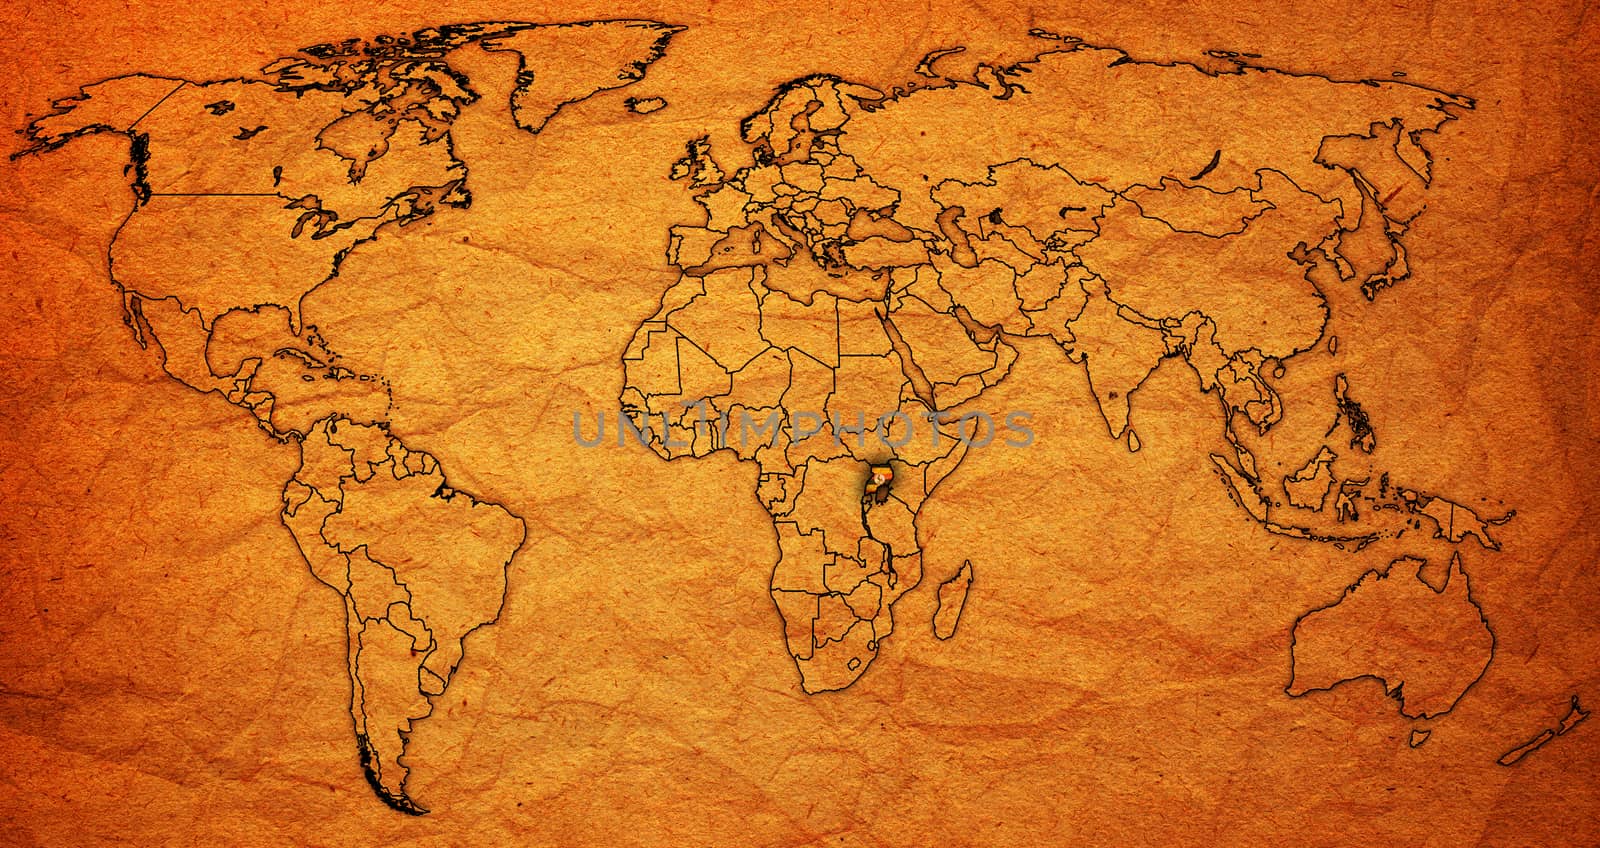 uganda territory on world map by michal812